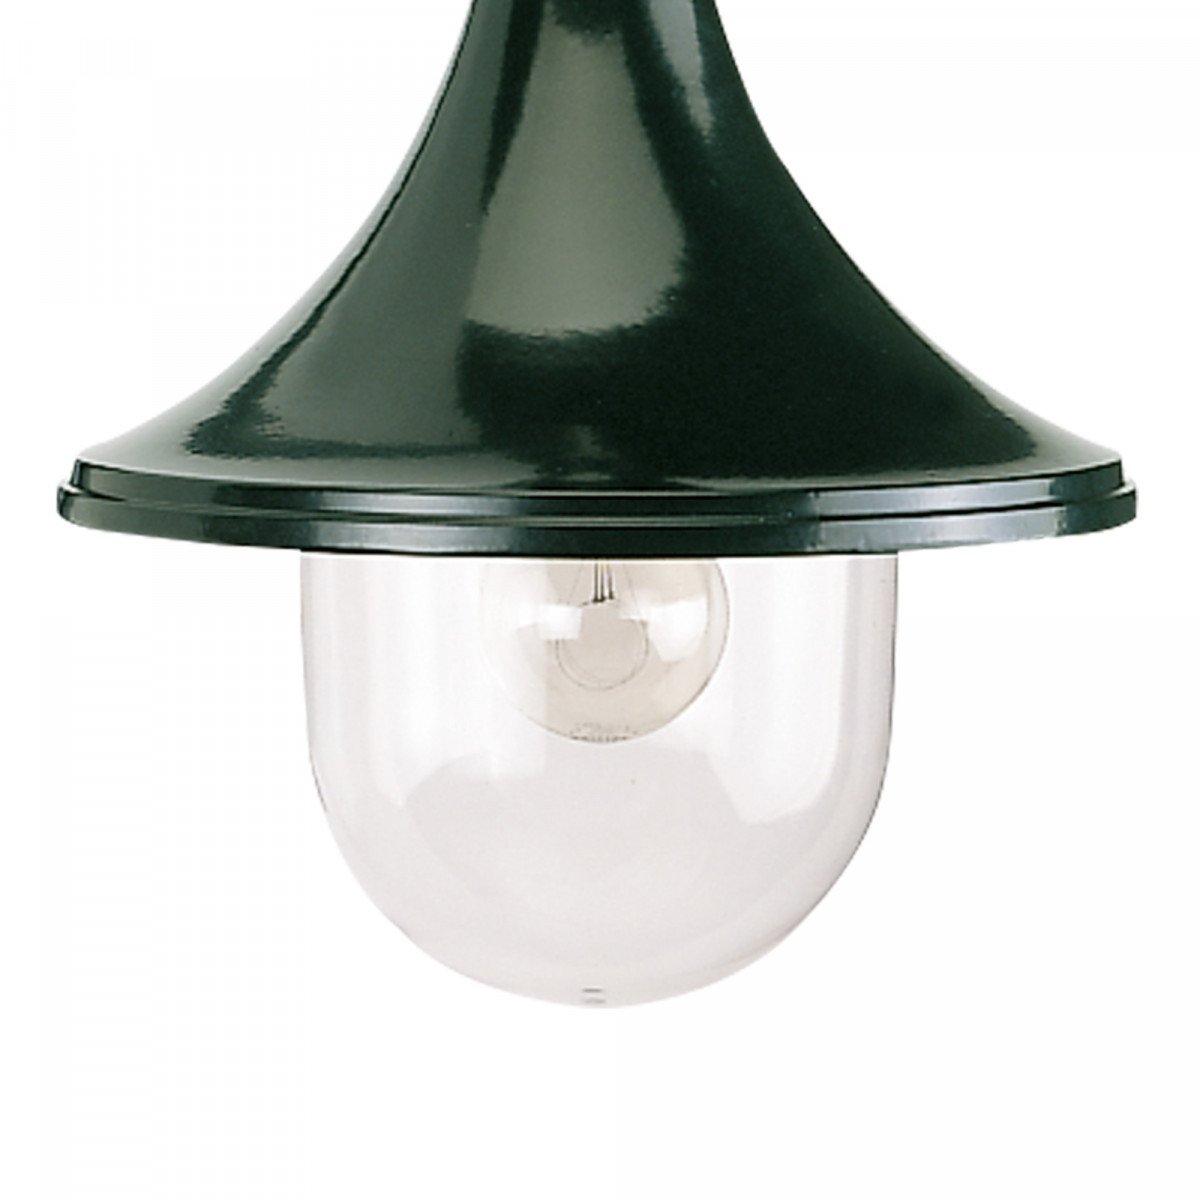 Acrylic glass lens Rimini Garden lamp post